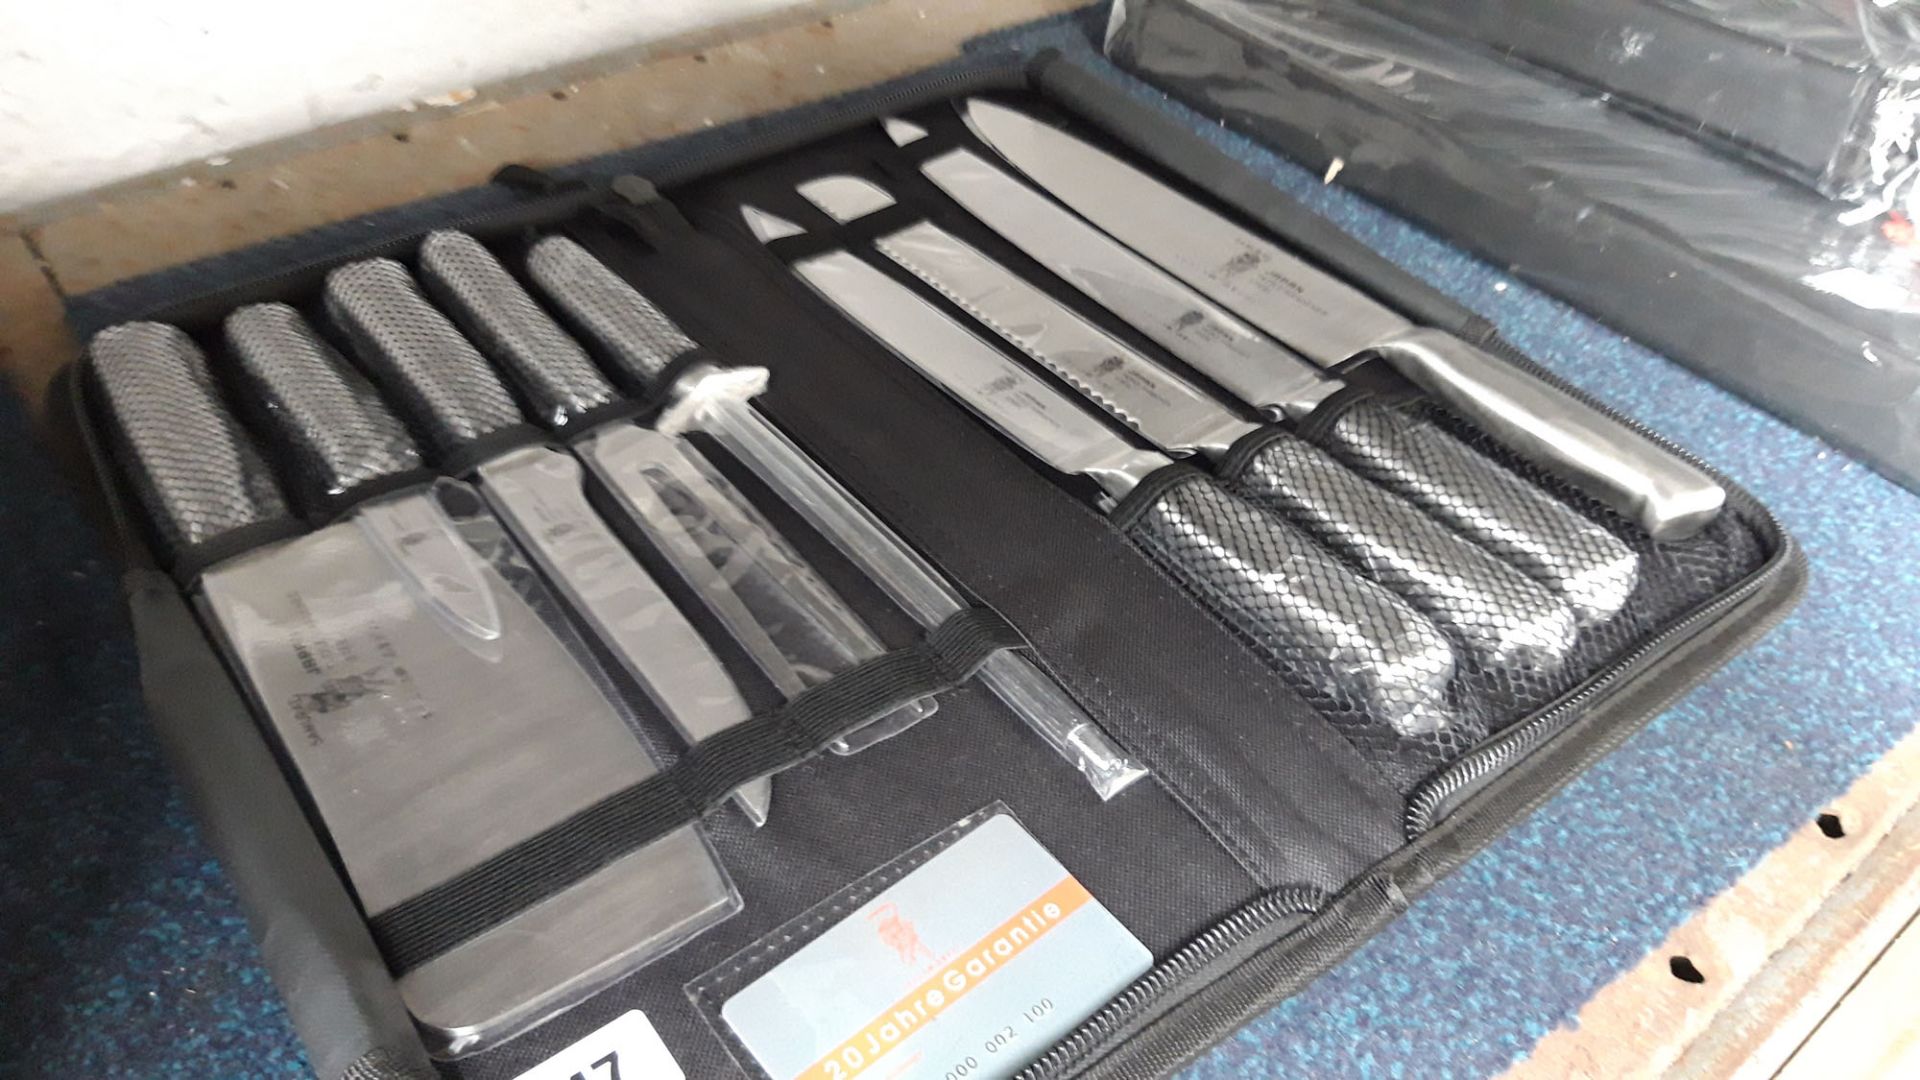 Zip case containing Samurai 9pce knife set